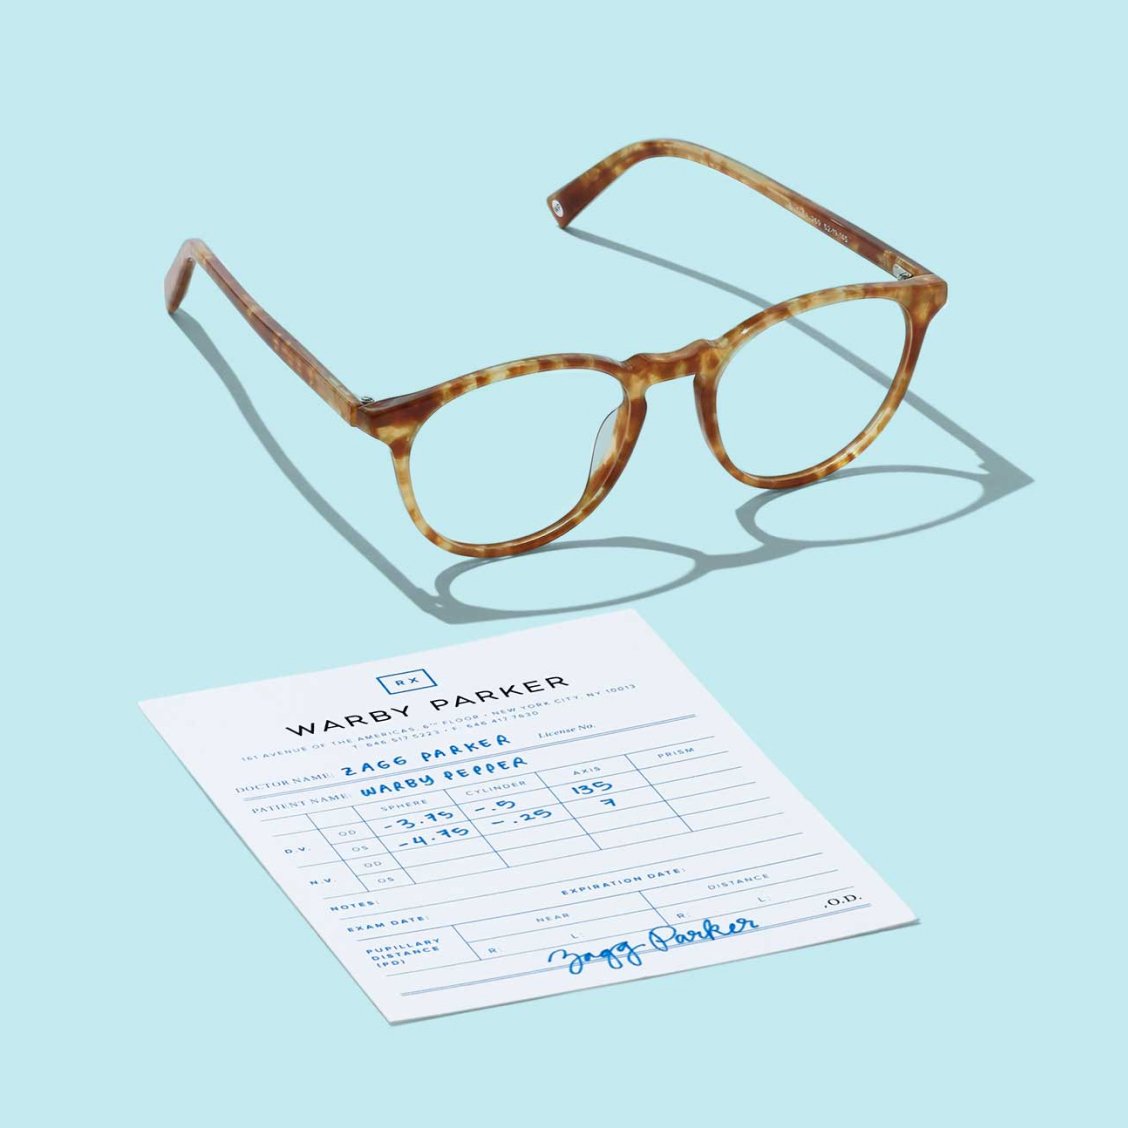 A pair of glasses next to an eye prescription